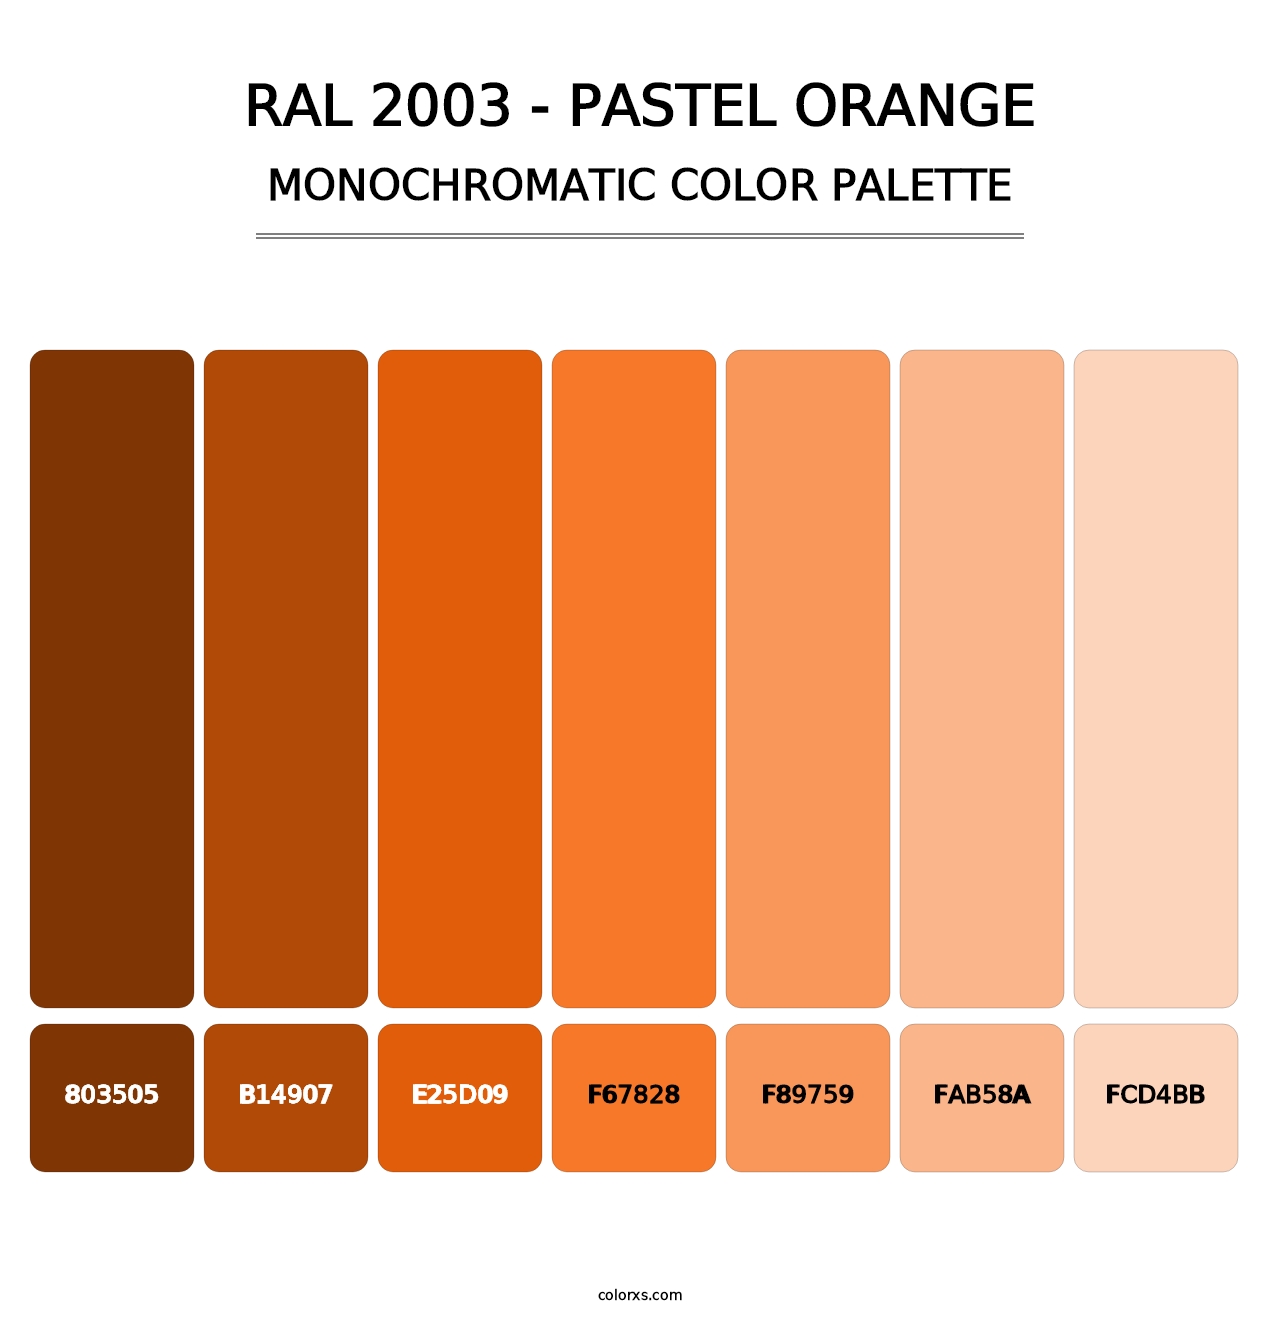 RAL 2003 - Pastel Orange - Monochromatic Color Palette